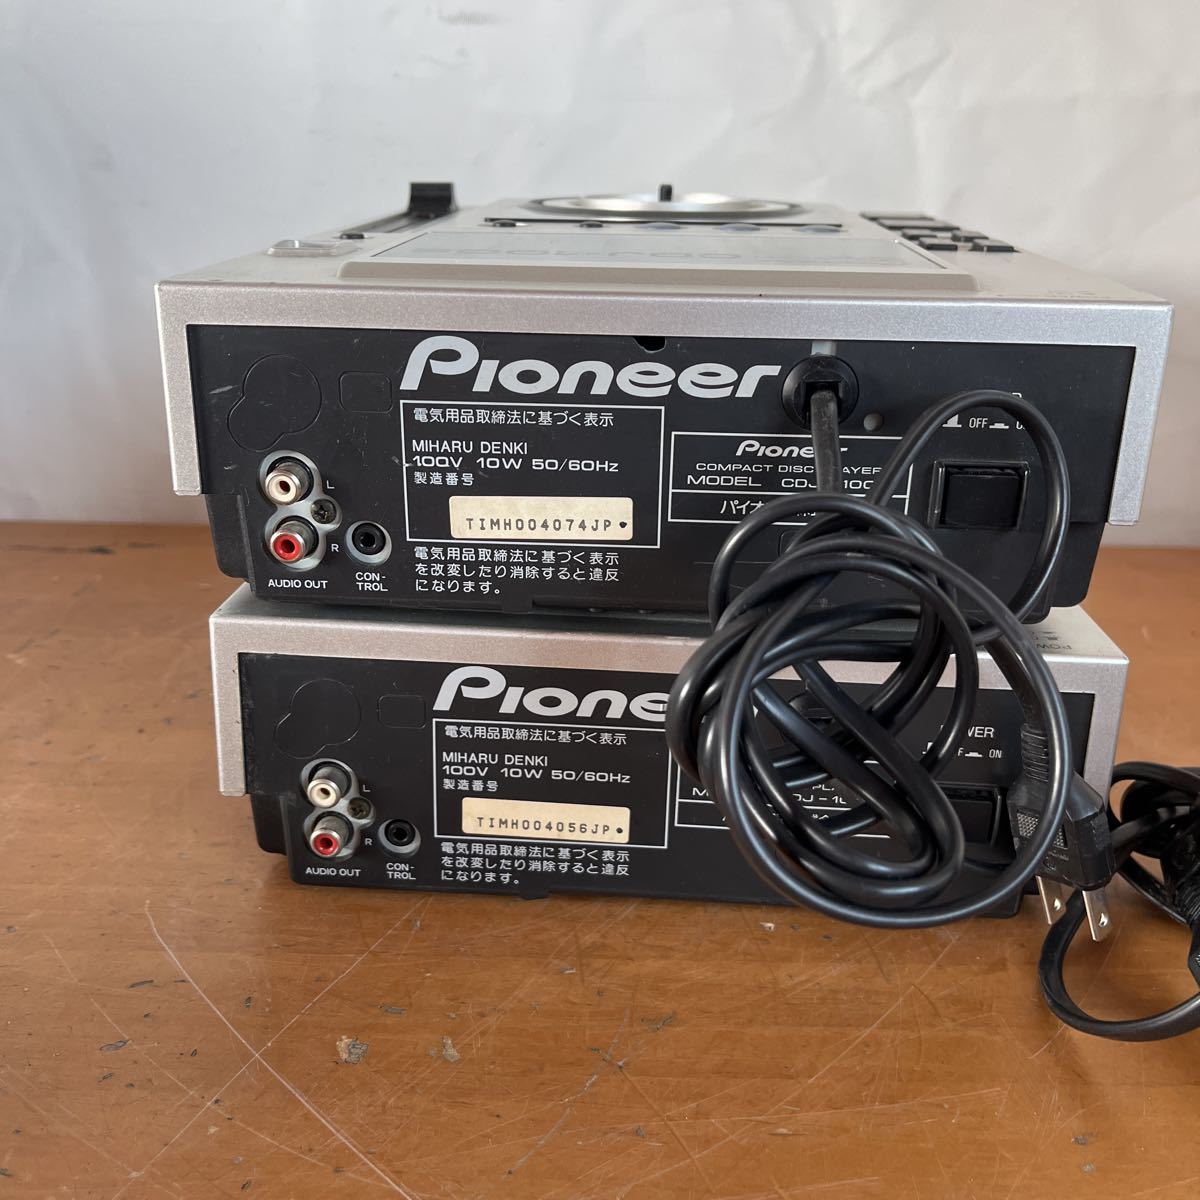 Pioneer / CDJ-100S Professional CD плеер аудио 